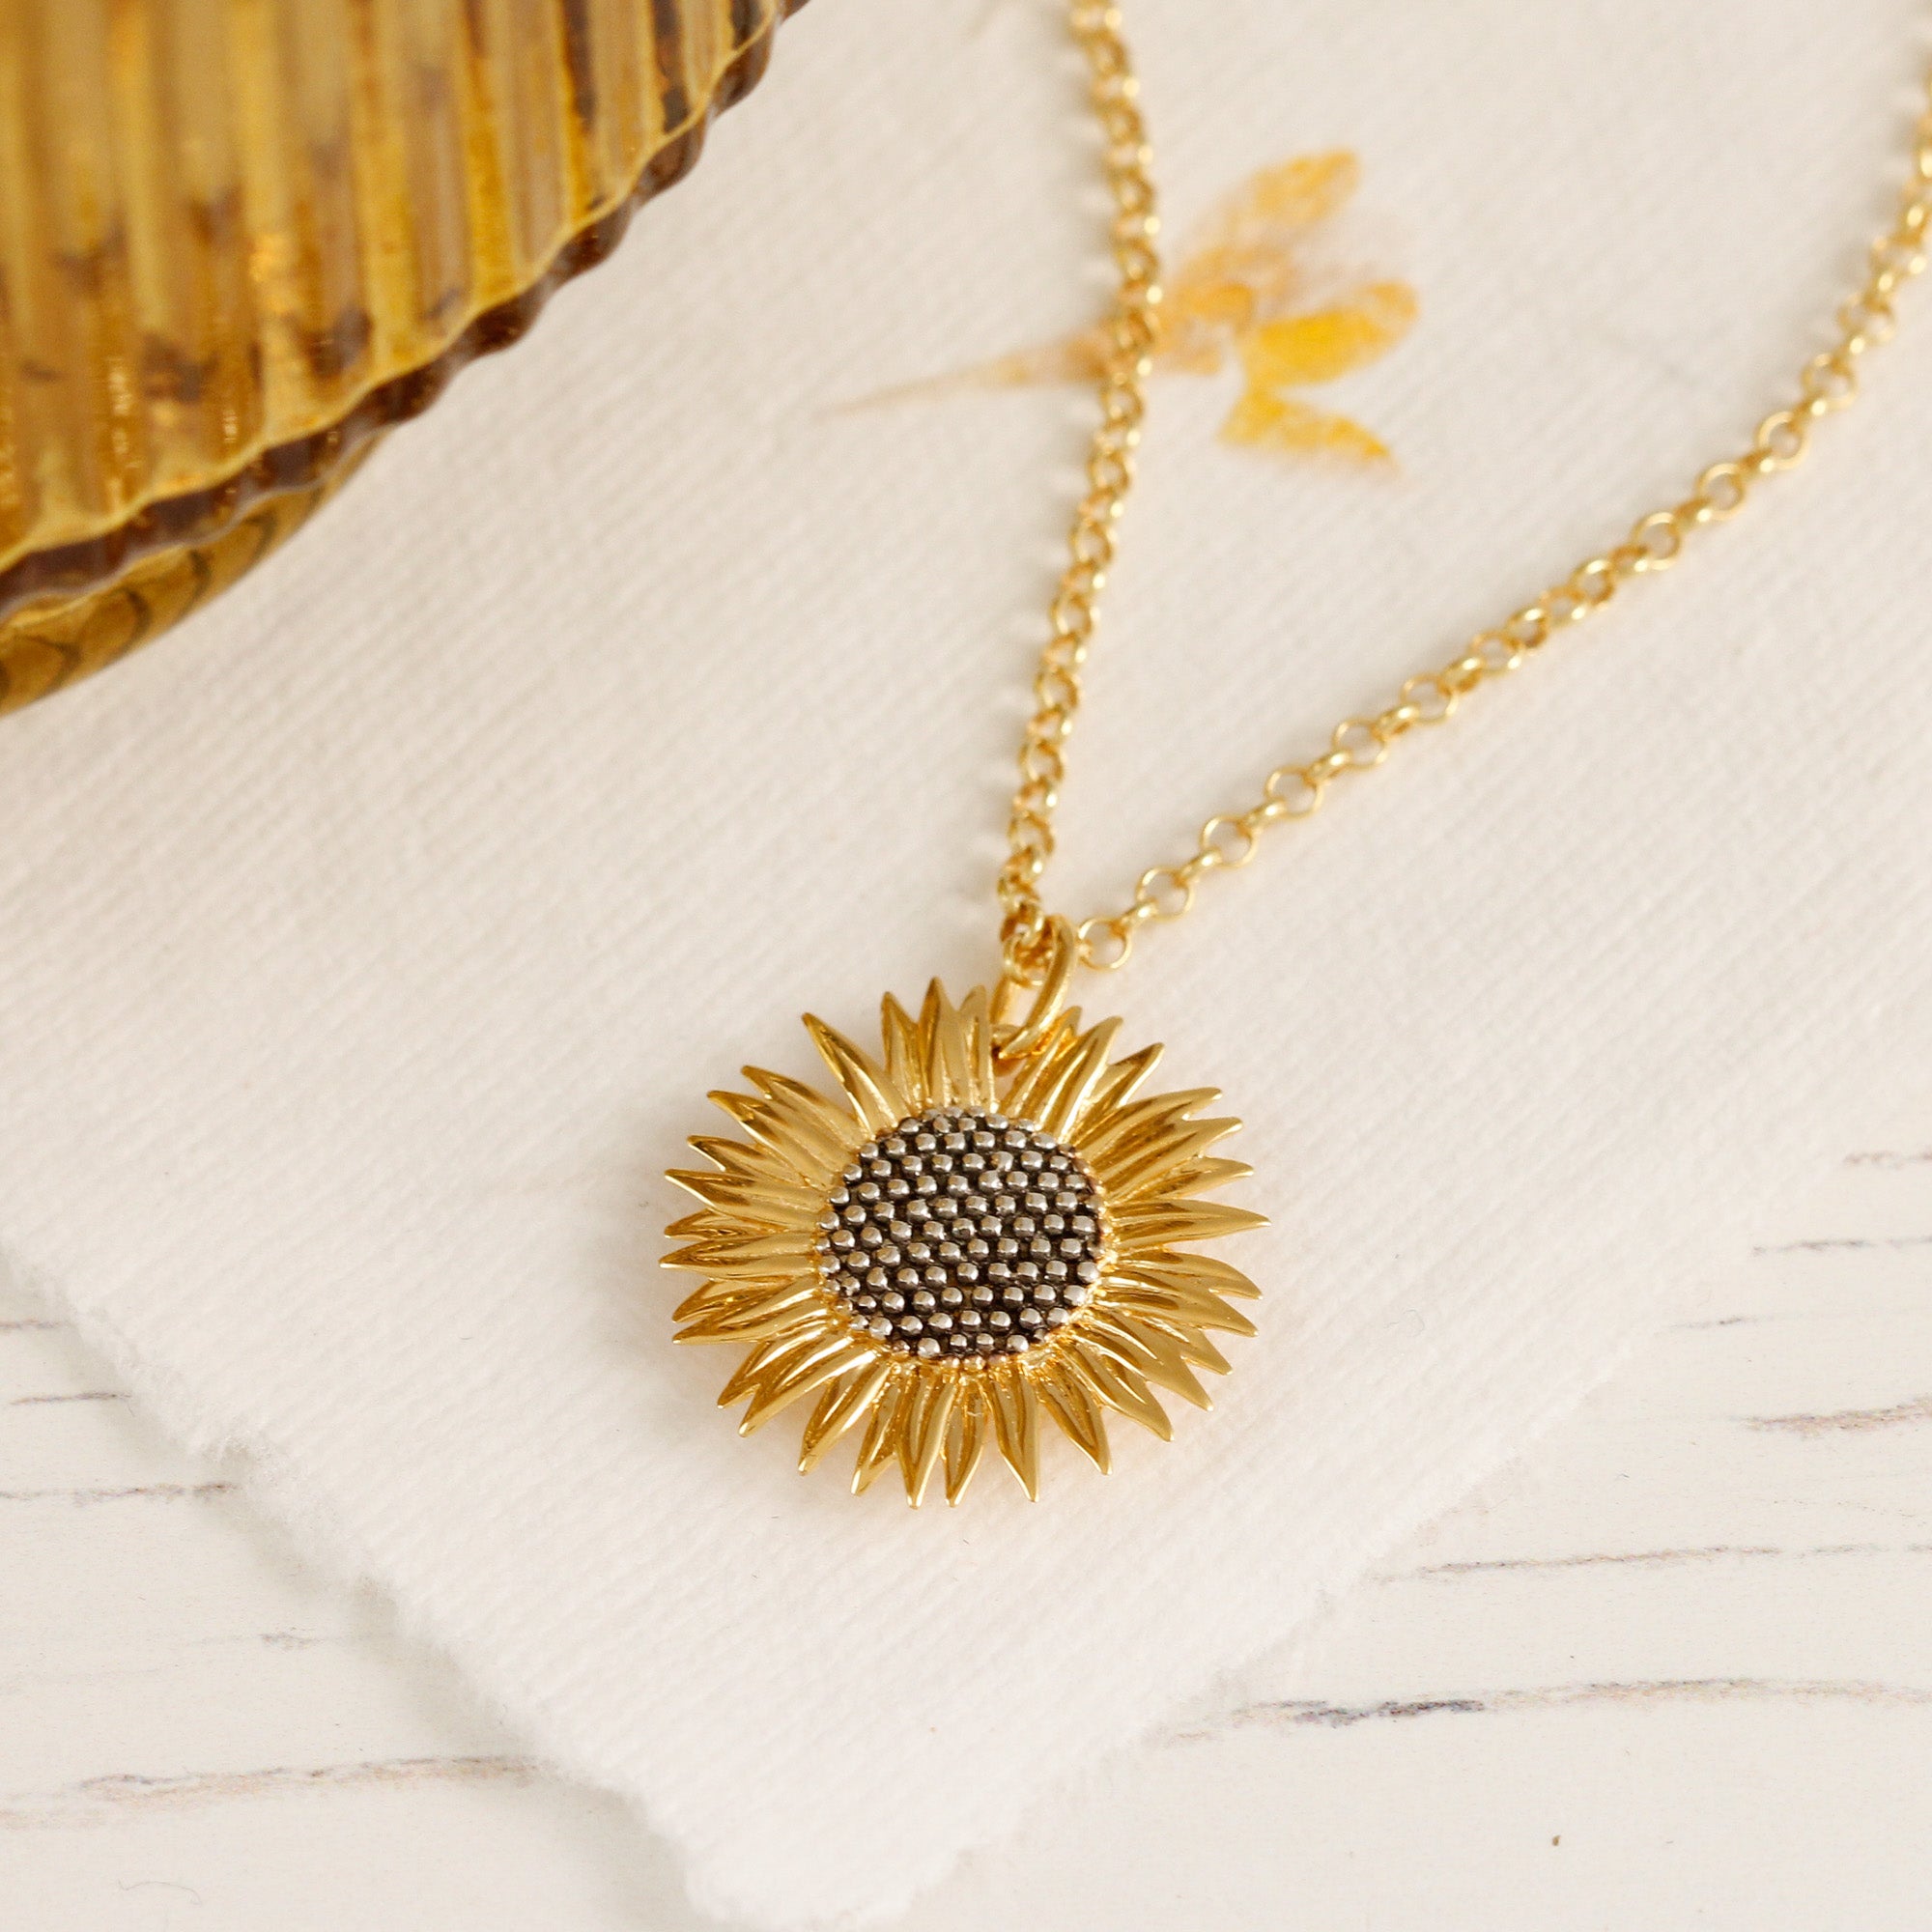 gold vermeil sunflower necklace Chelsea Flower Show